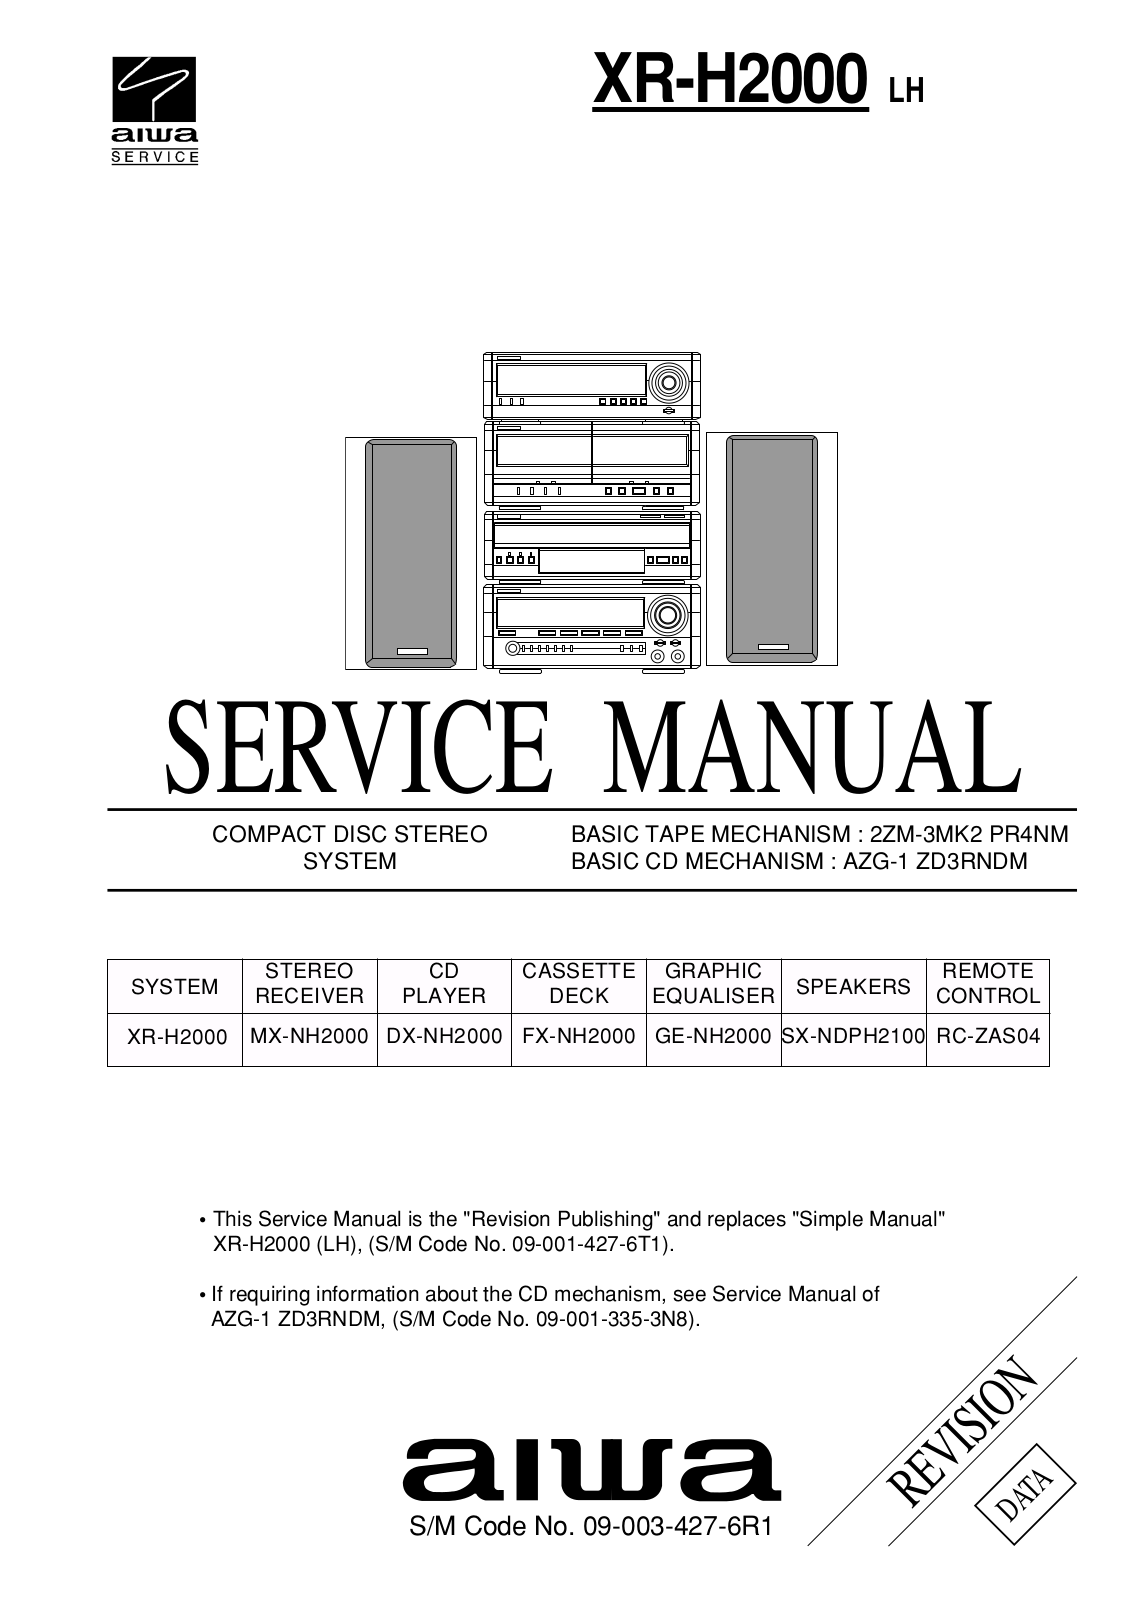 Aiwa XR-H2000 Service Manual